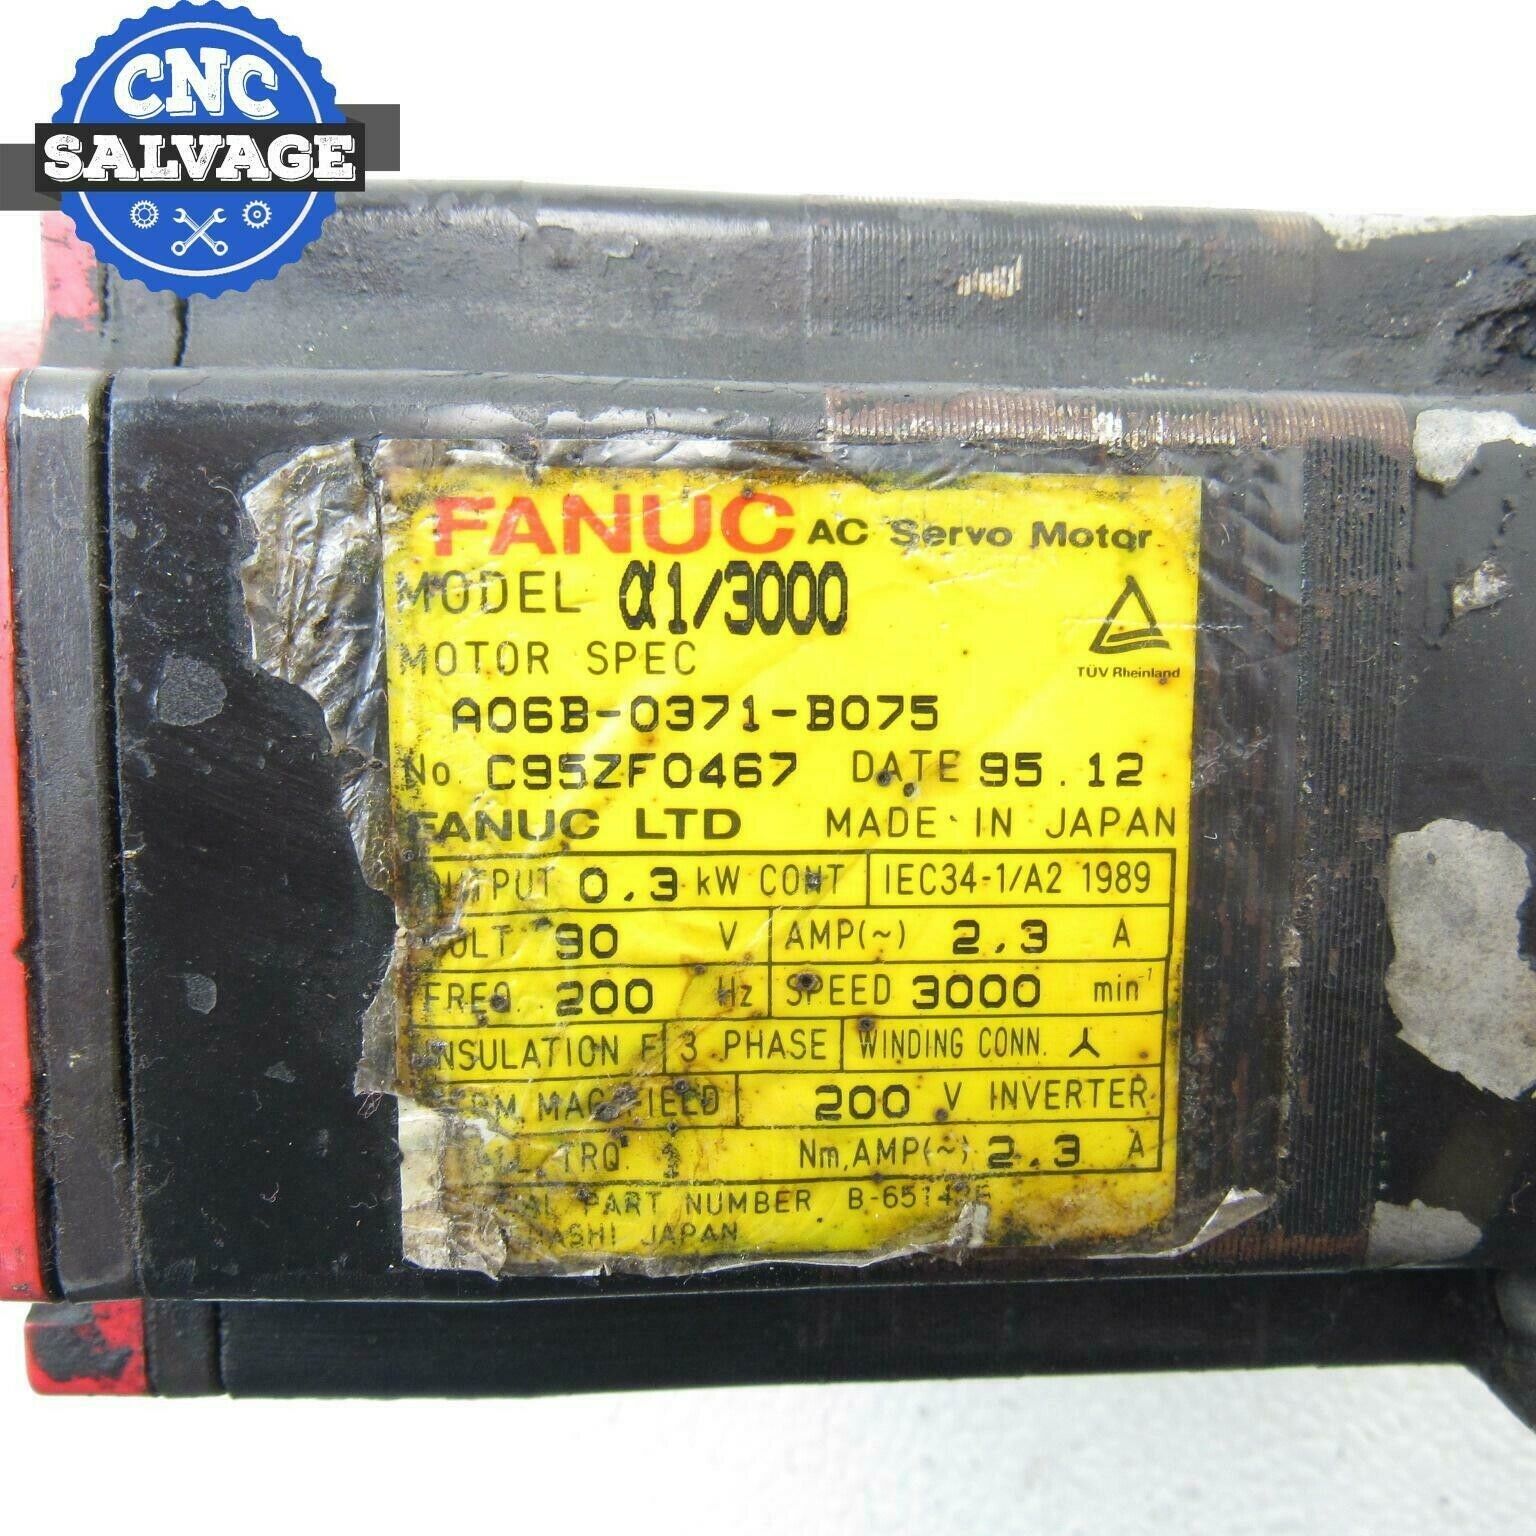 FANUC 交流伺服电动机 a06b-0371-b075 